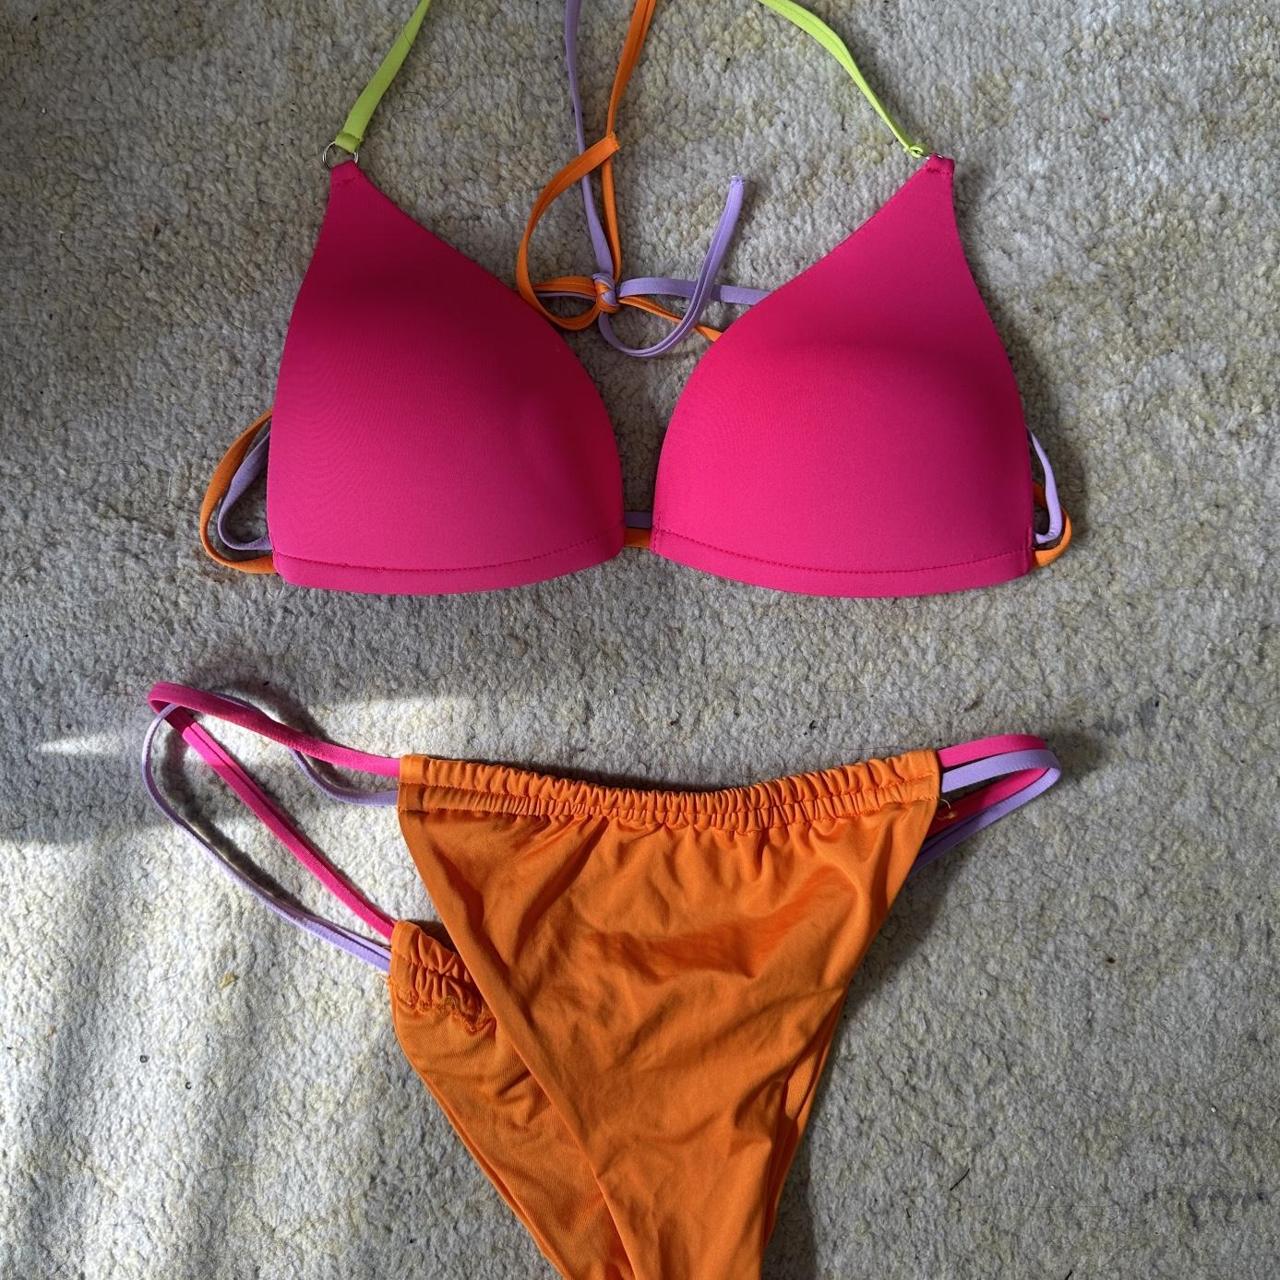 Calzedonia Women's Orange and Pink Bikinis-and-tankini-sets